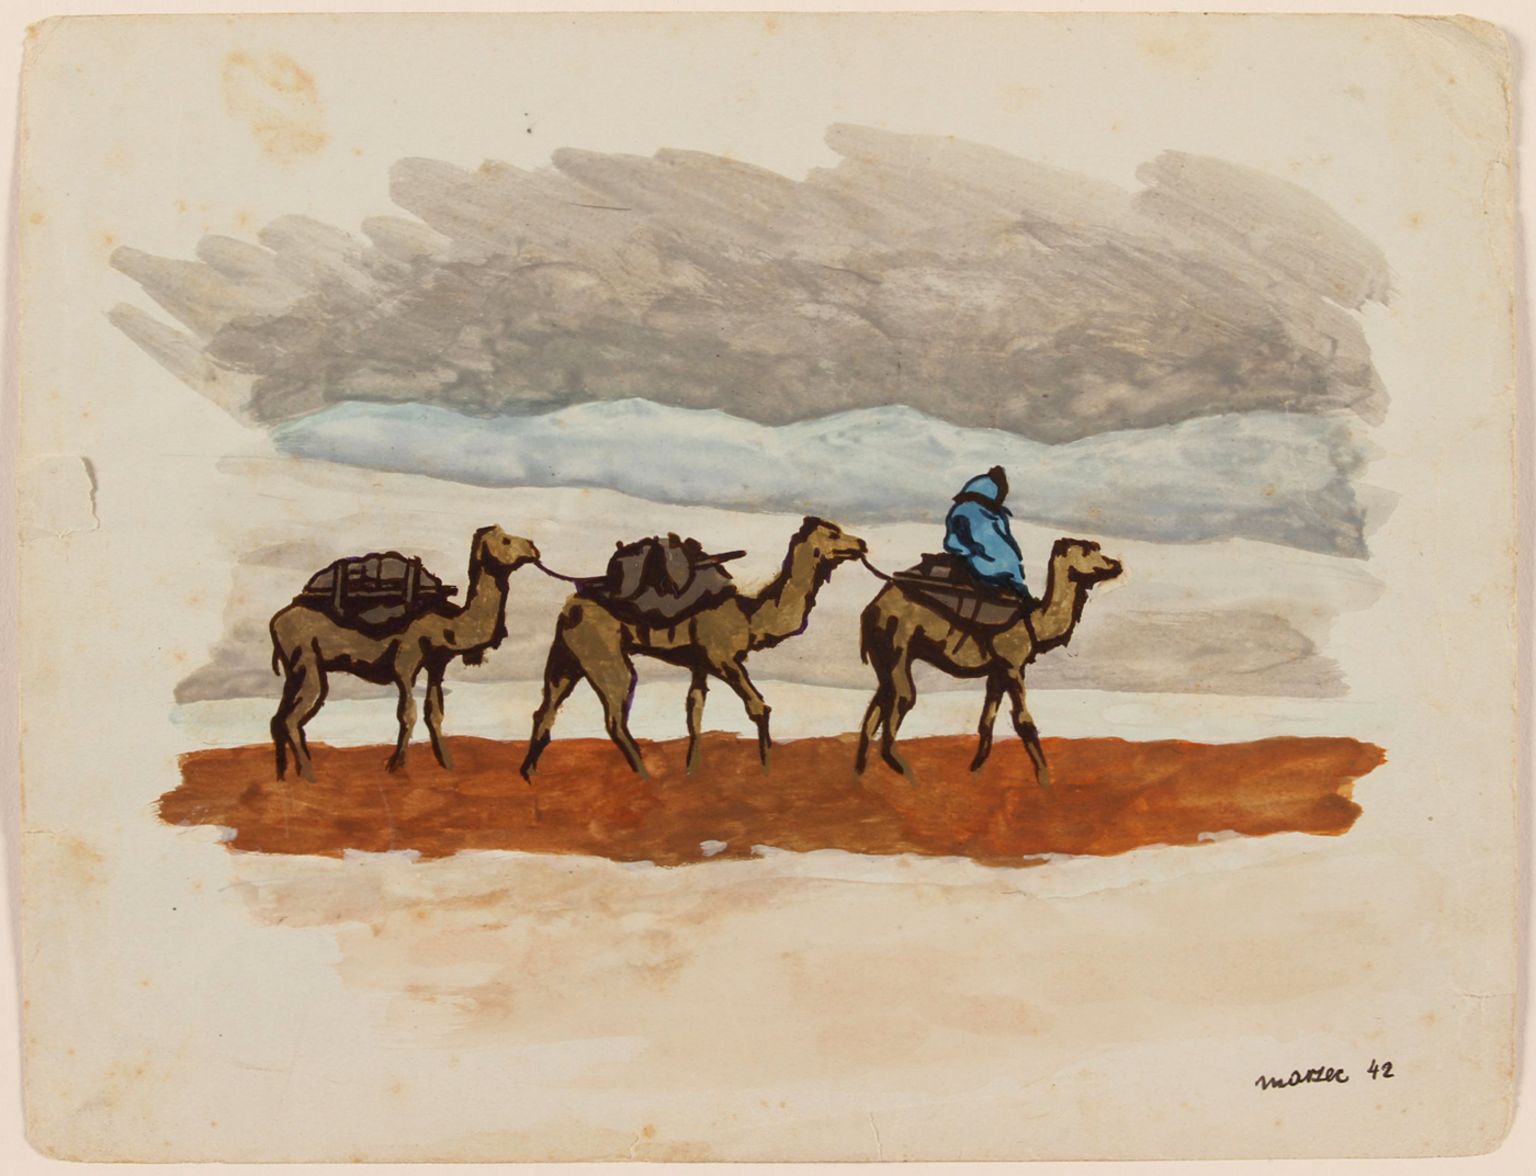 Rider and Three Camels, Kyrgyzstan, 1942